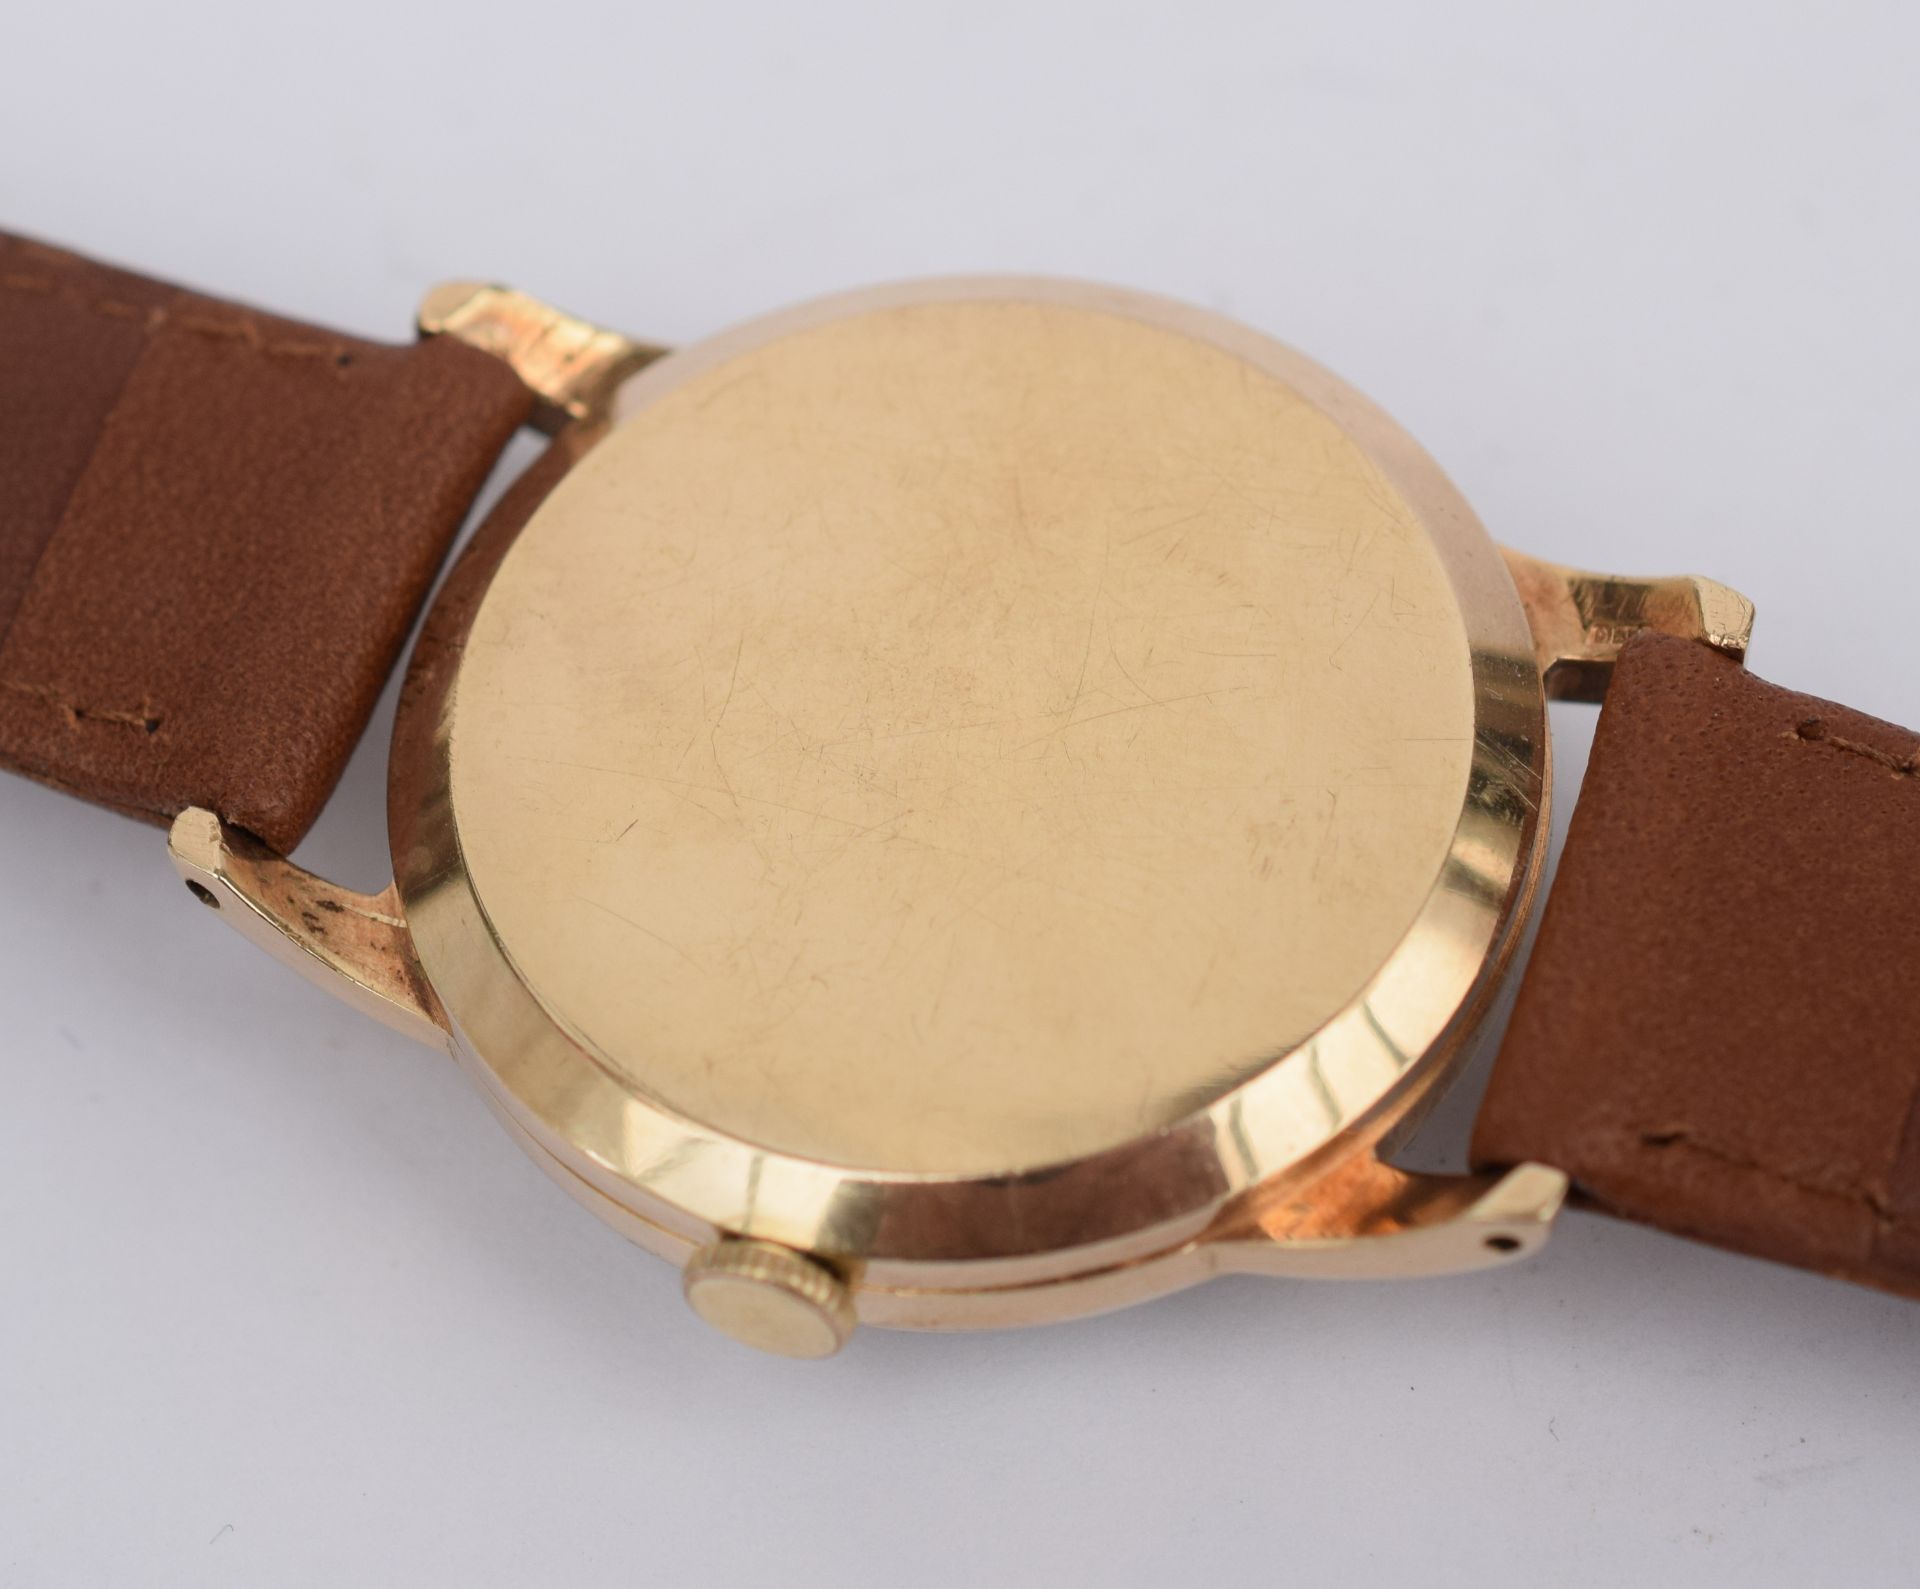 9ct Gold Garrard Gentleman's Manual Wind Wristwatch - Image 3 of 9